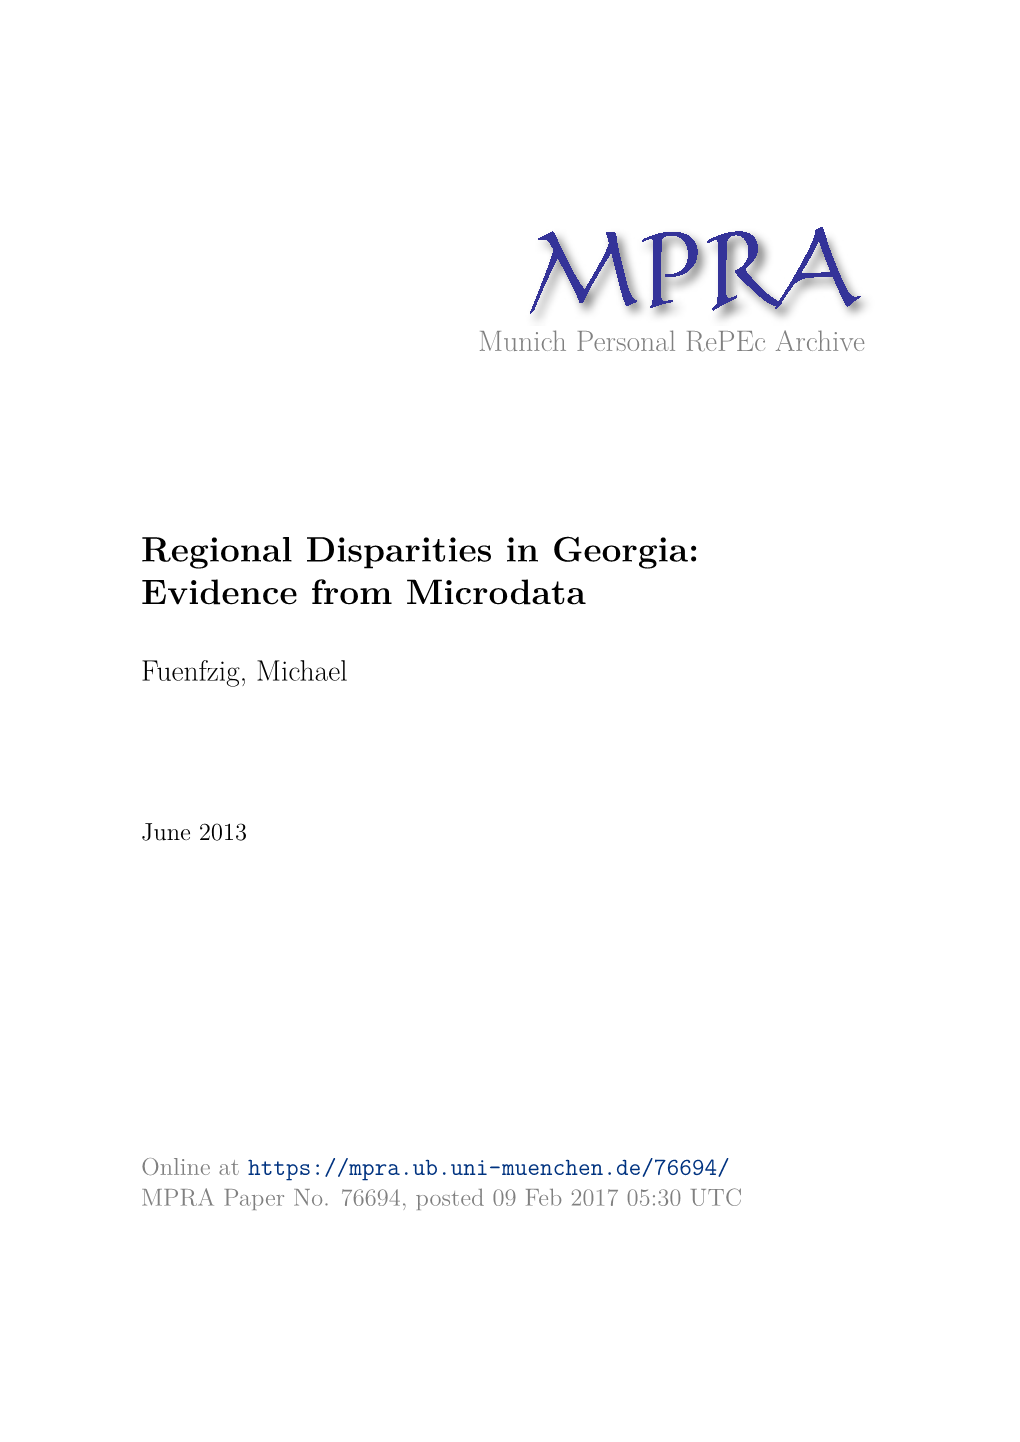 Regional Disparities in Georgia: Evidence from Microdata